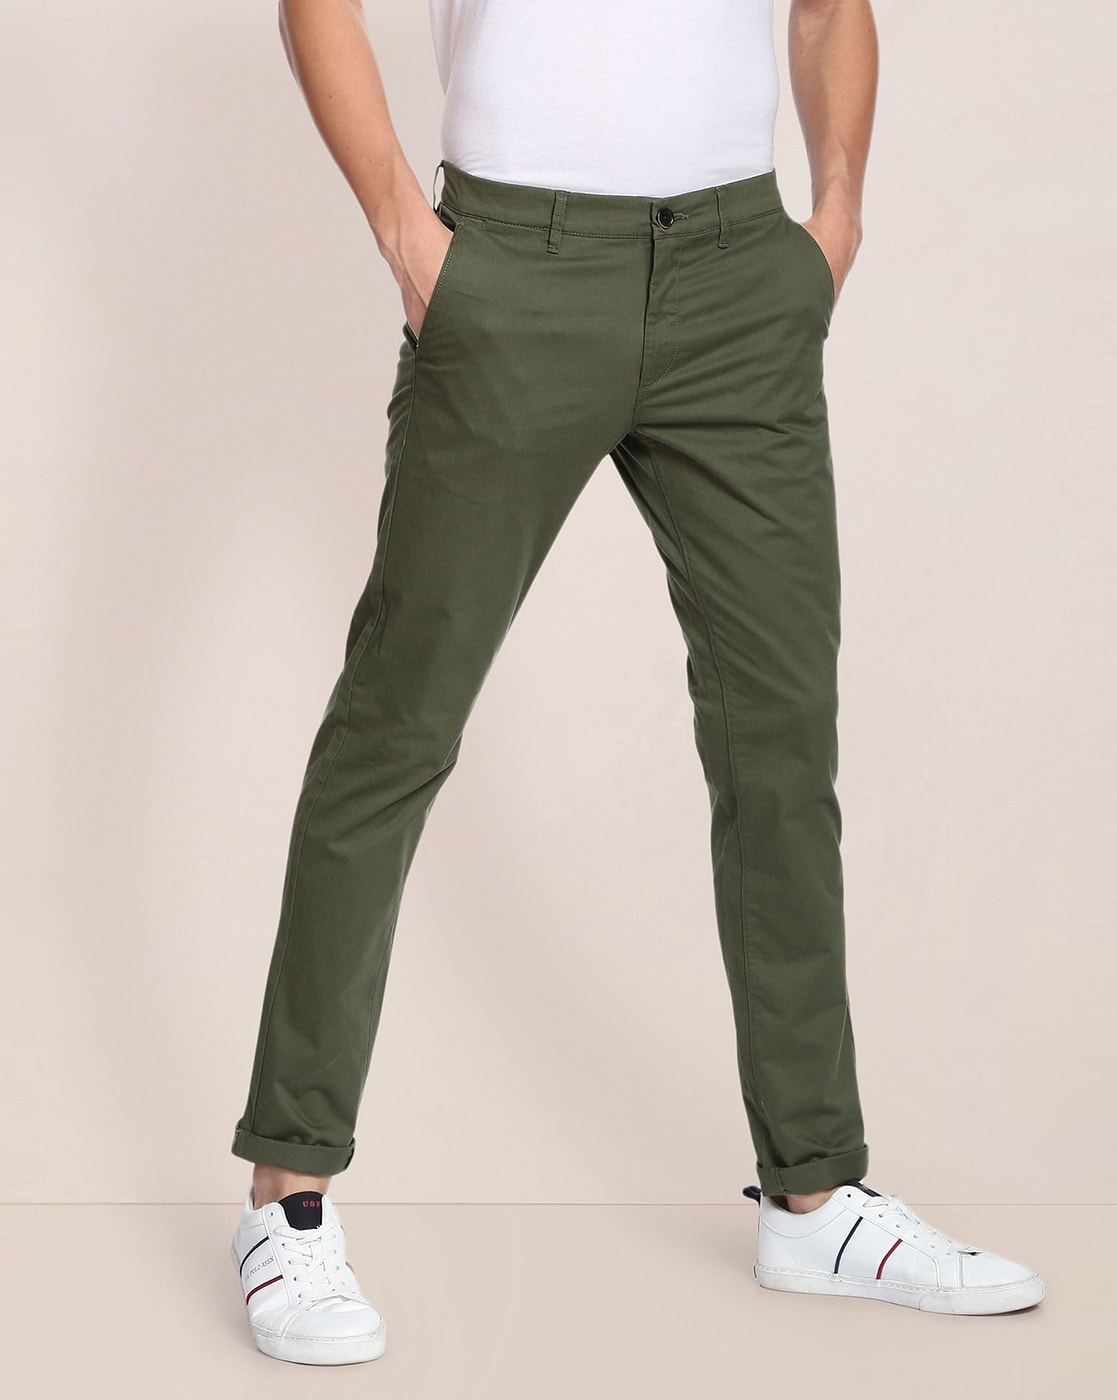 Sell Brand Fashion Male Cotton Trousers Men Army Green Pencil Pants Casual  Solid Pants Khaki Black Pants Large Size 38  Fruugo SA